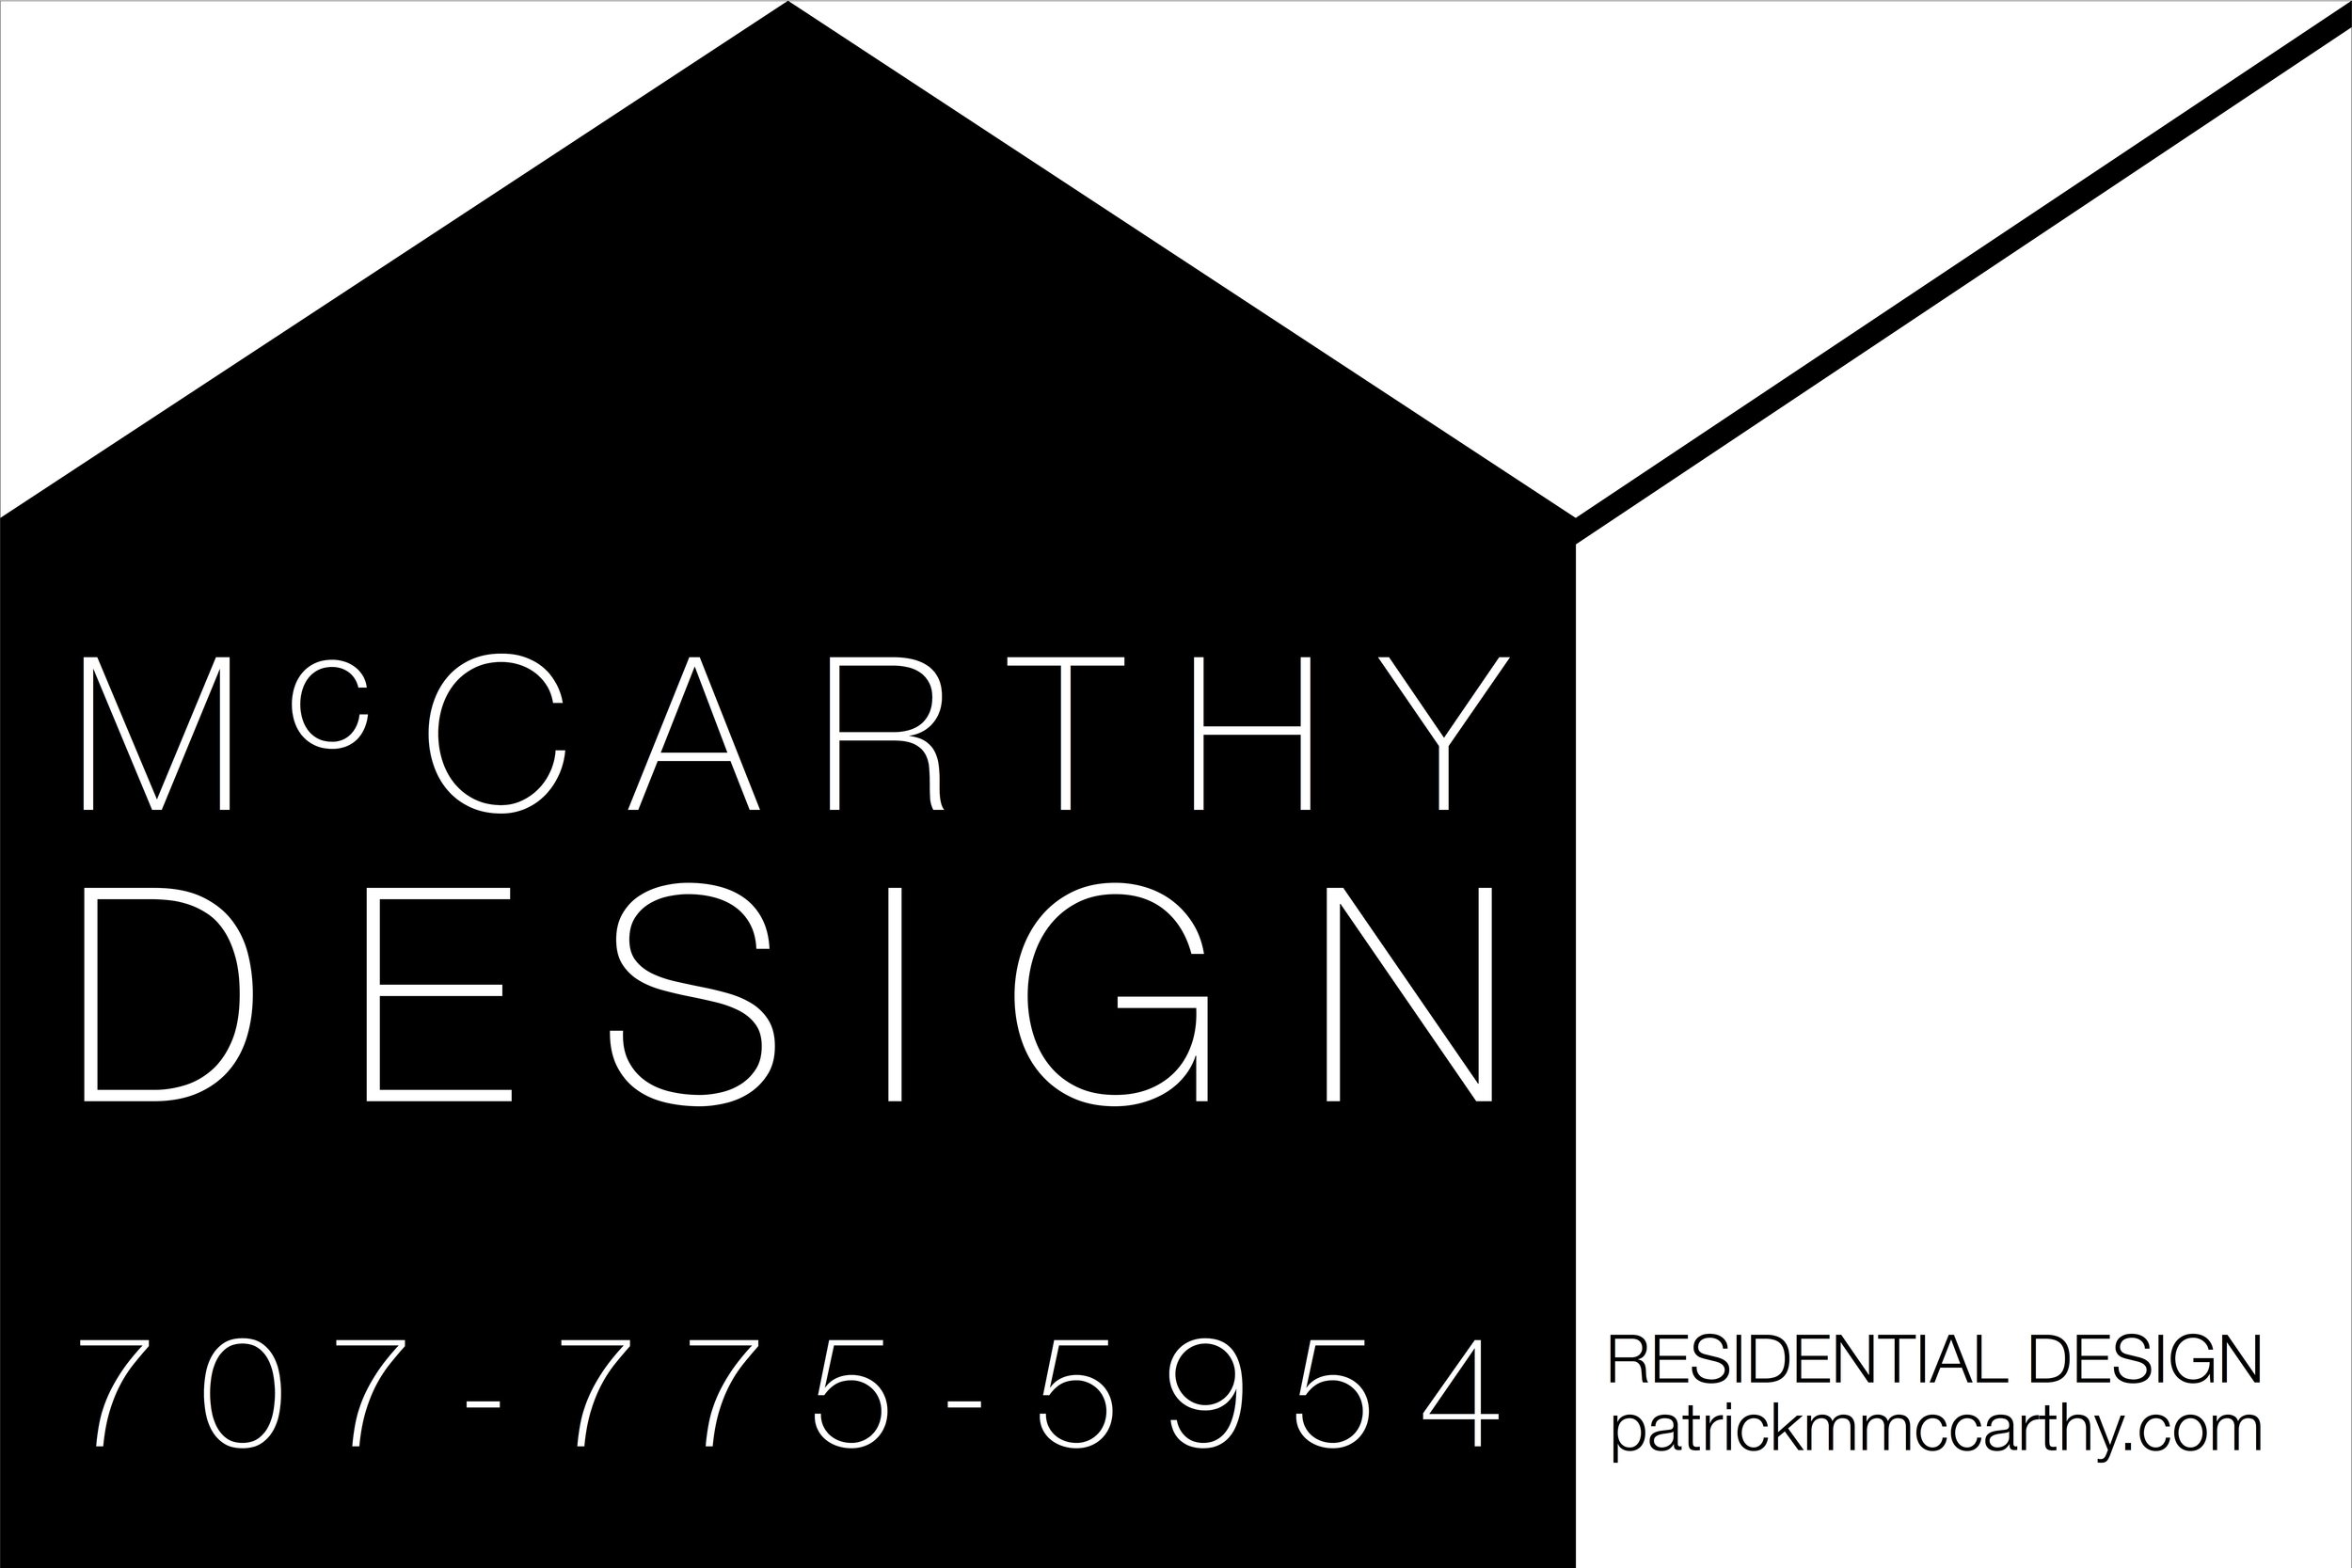 McCarthy Design